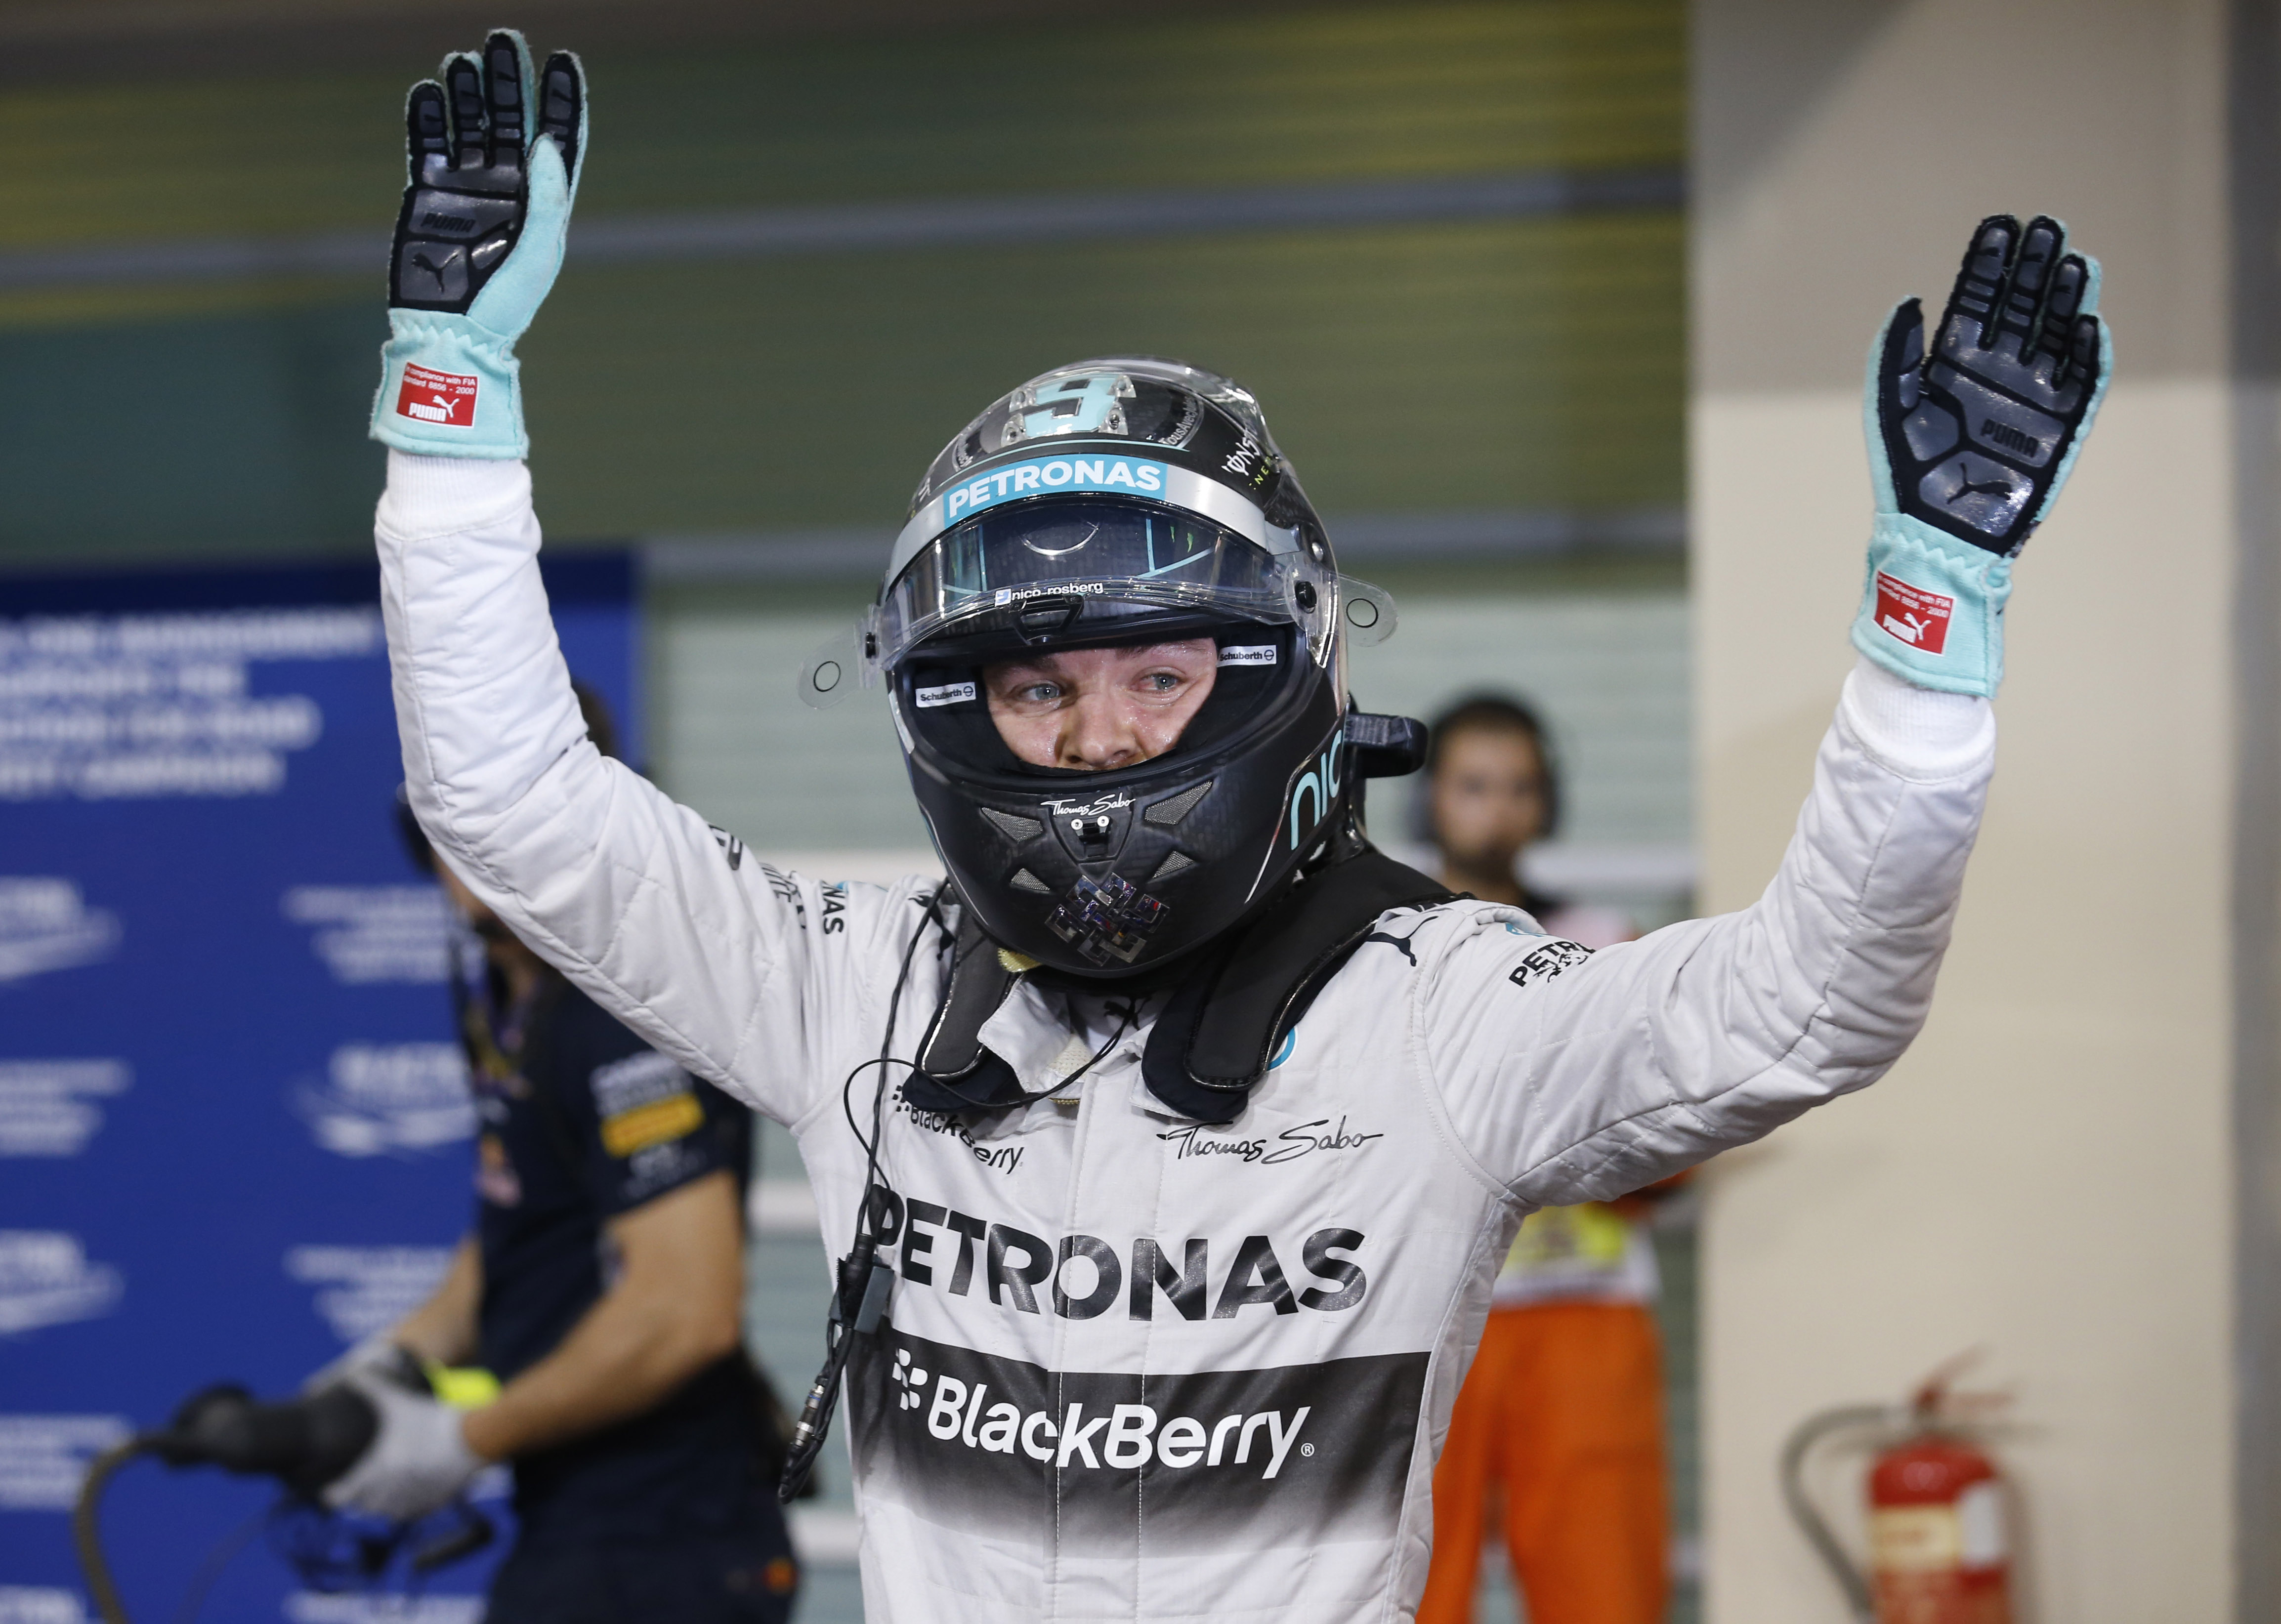 GP Αbu Dhabi 2014: Pole position για Rosberg, εκτός ρυθμού ο Hamilton